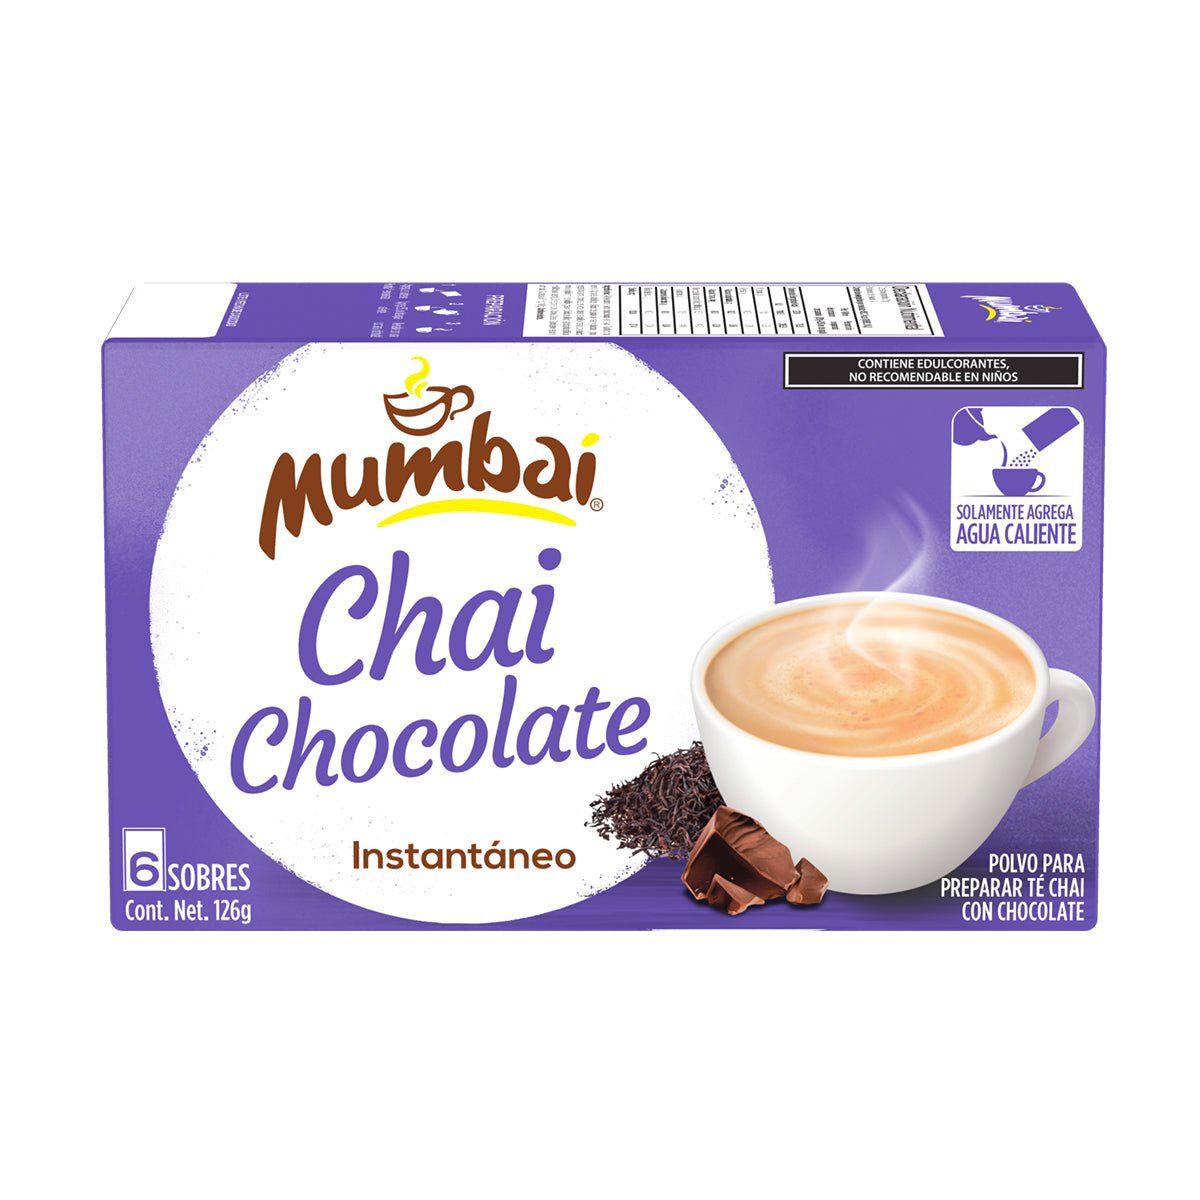 Mumbai Té Chai Chocolate 6 sobres